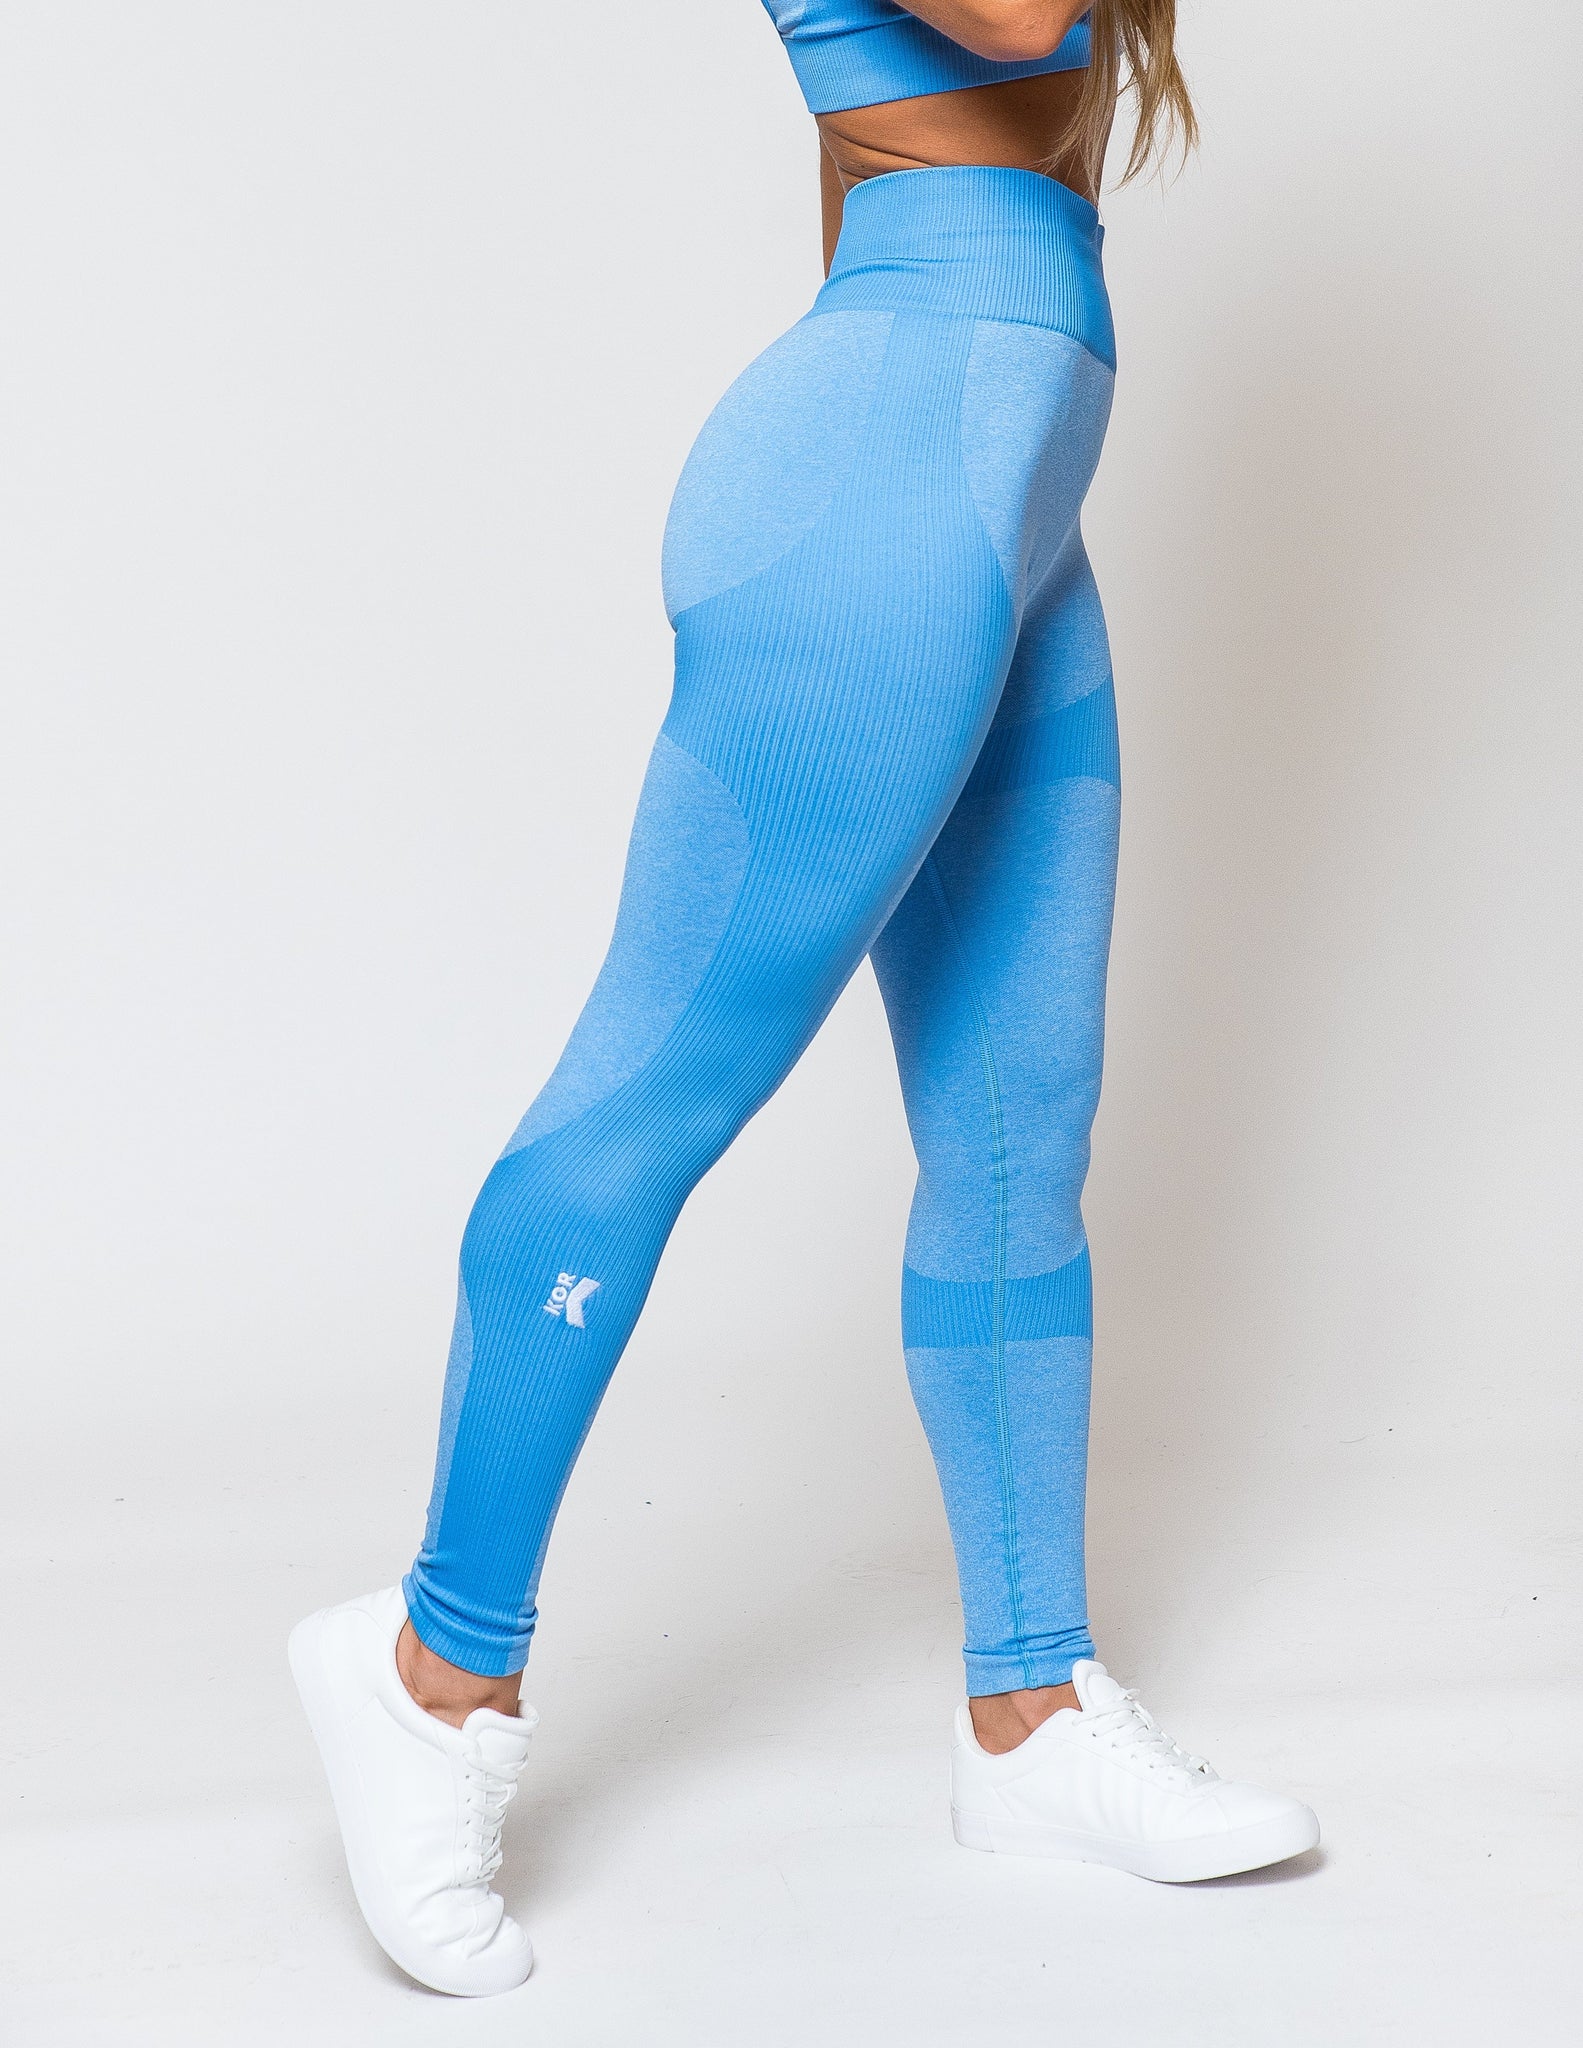 Yoga Basic Seamless Tummy Control Sports Leggings workout leggings